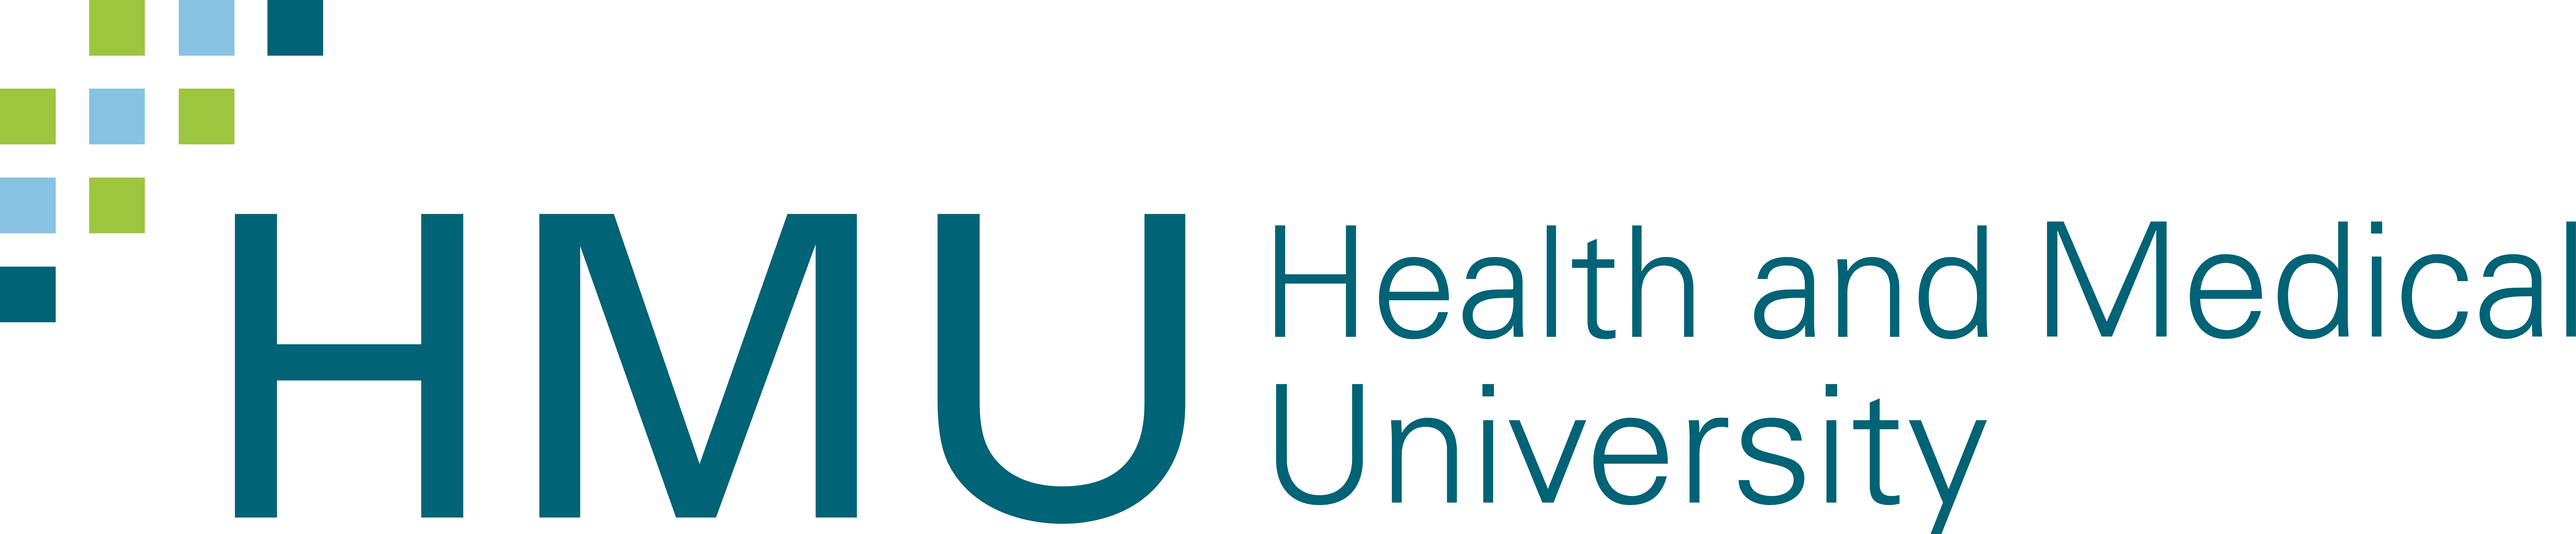 HMU Health and Medical University in Potsdam Logo